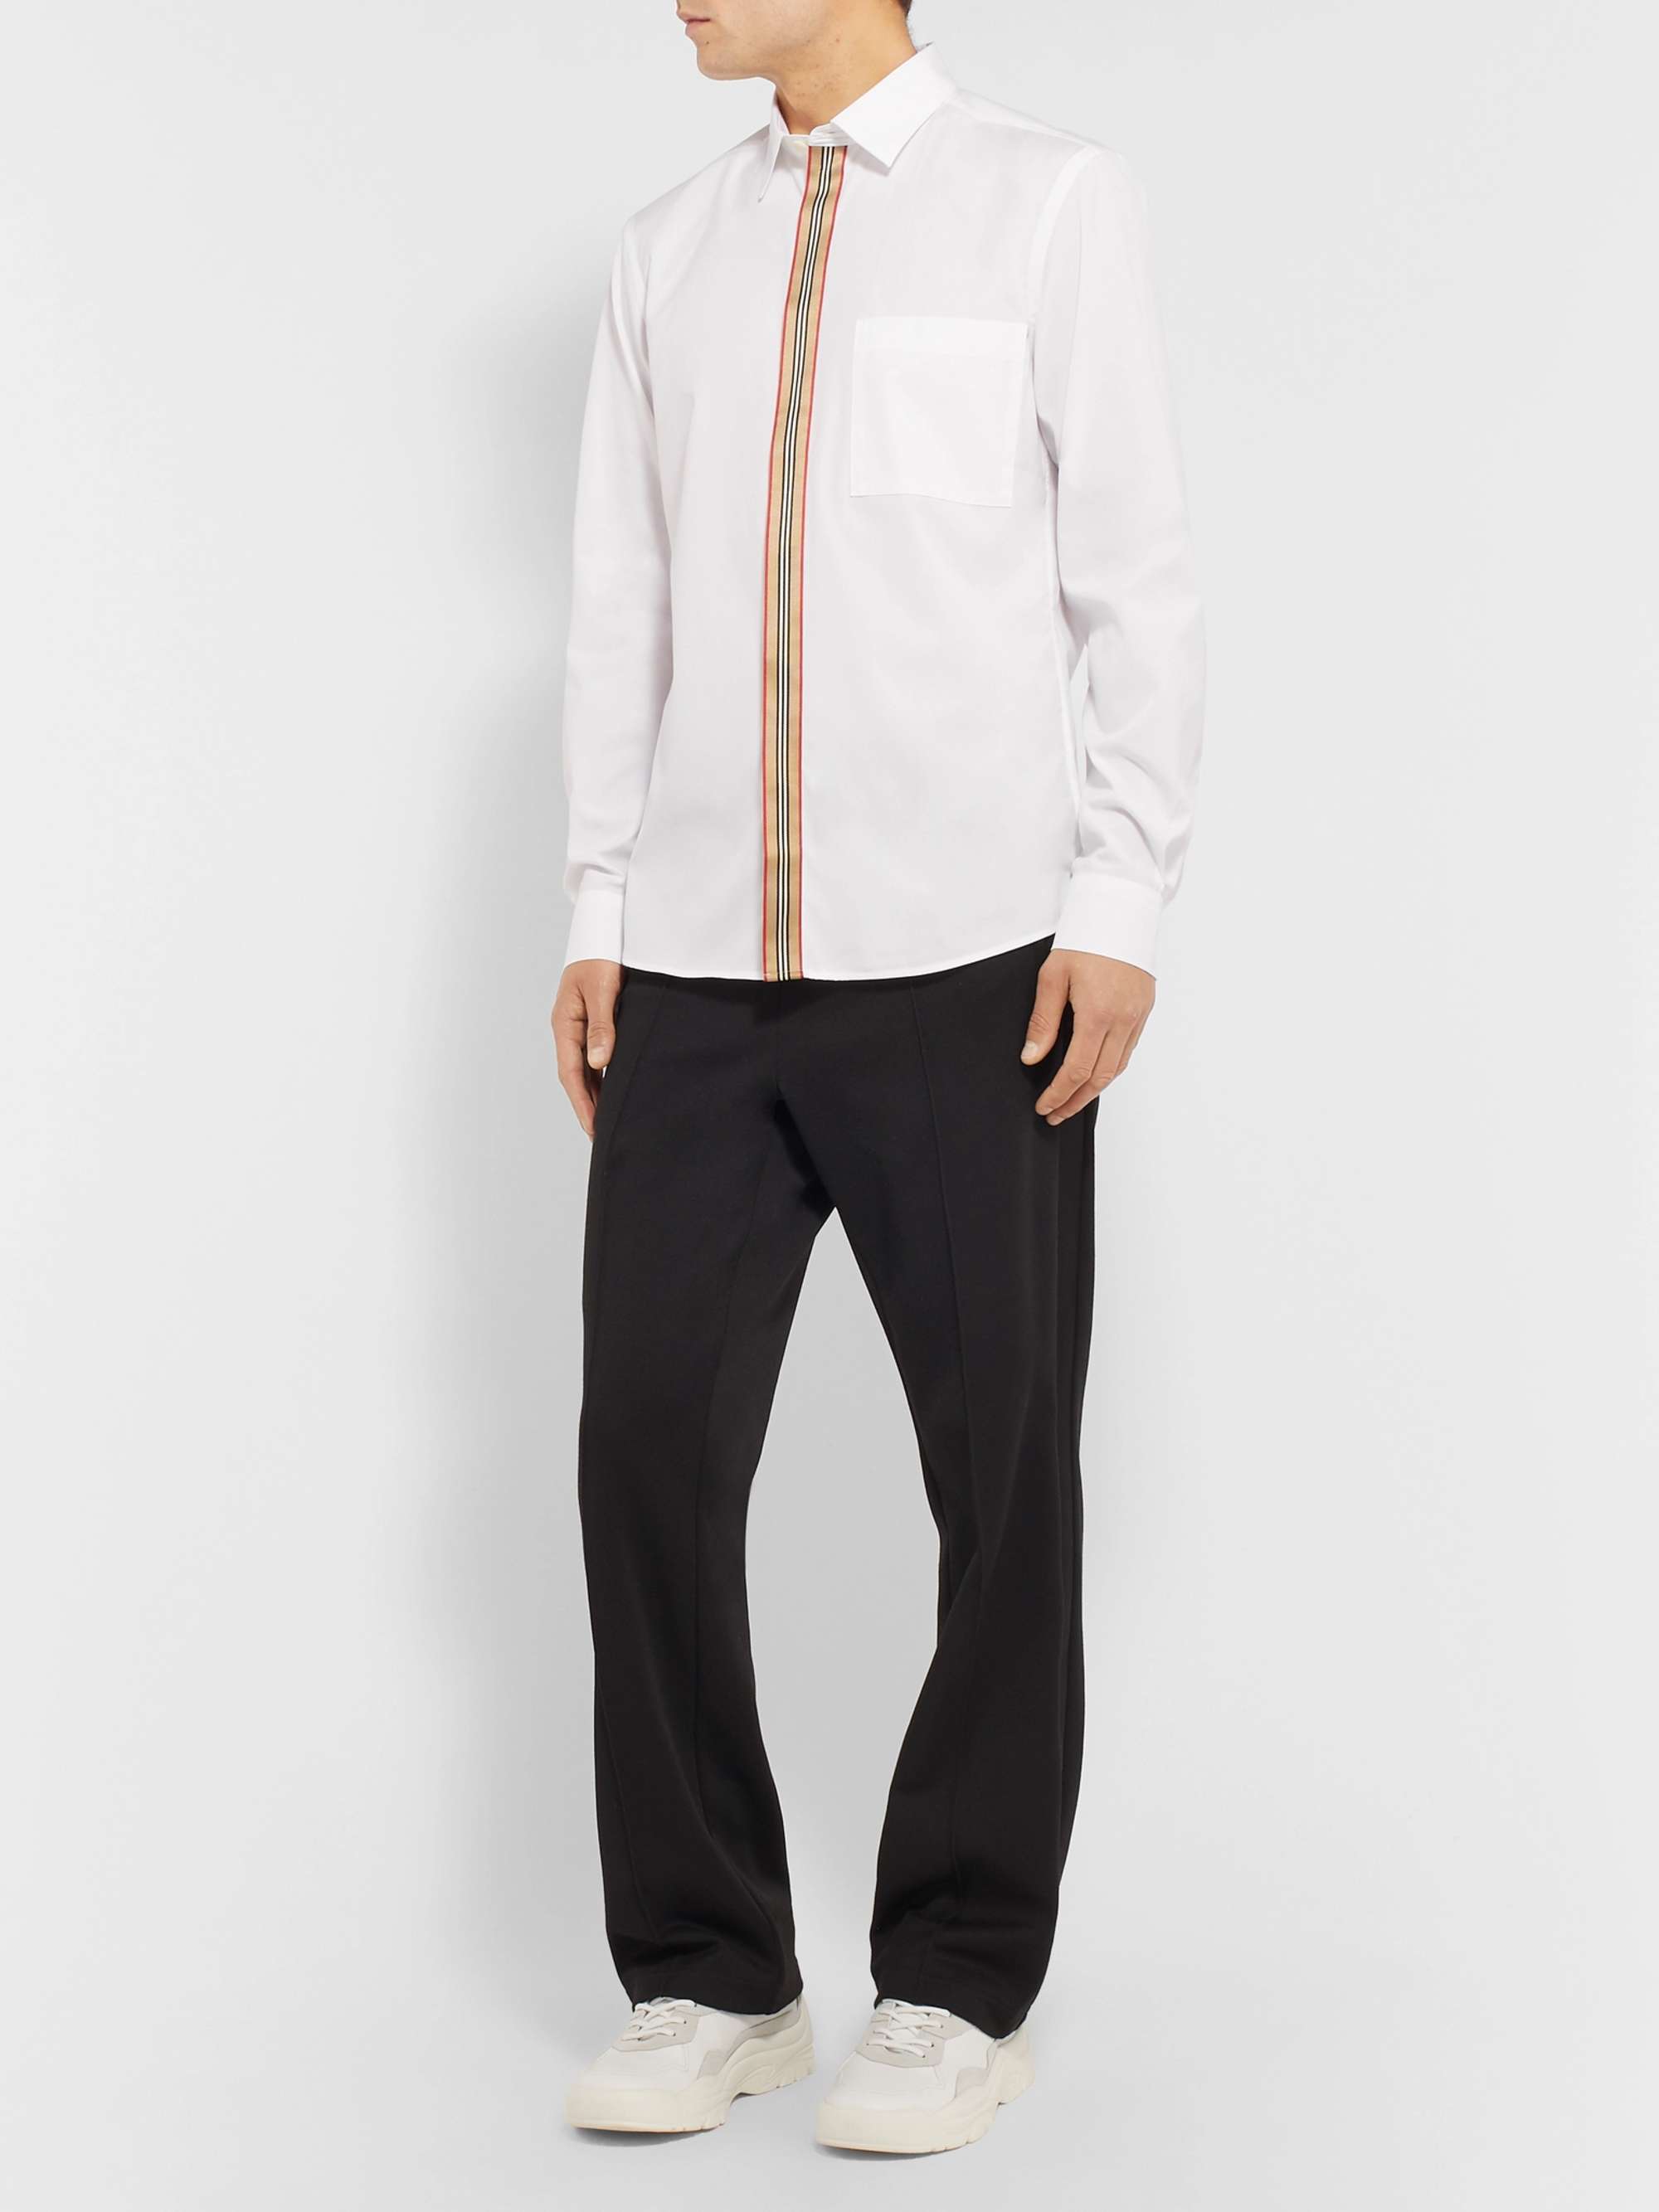 BURBERRY Slim-Fit Striped Grosgrain-Trimmed Cotton-Blend Oxford Shirt